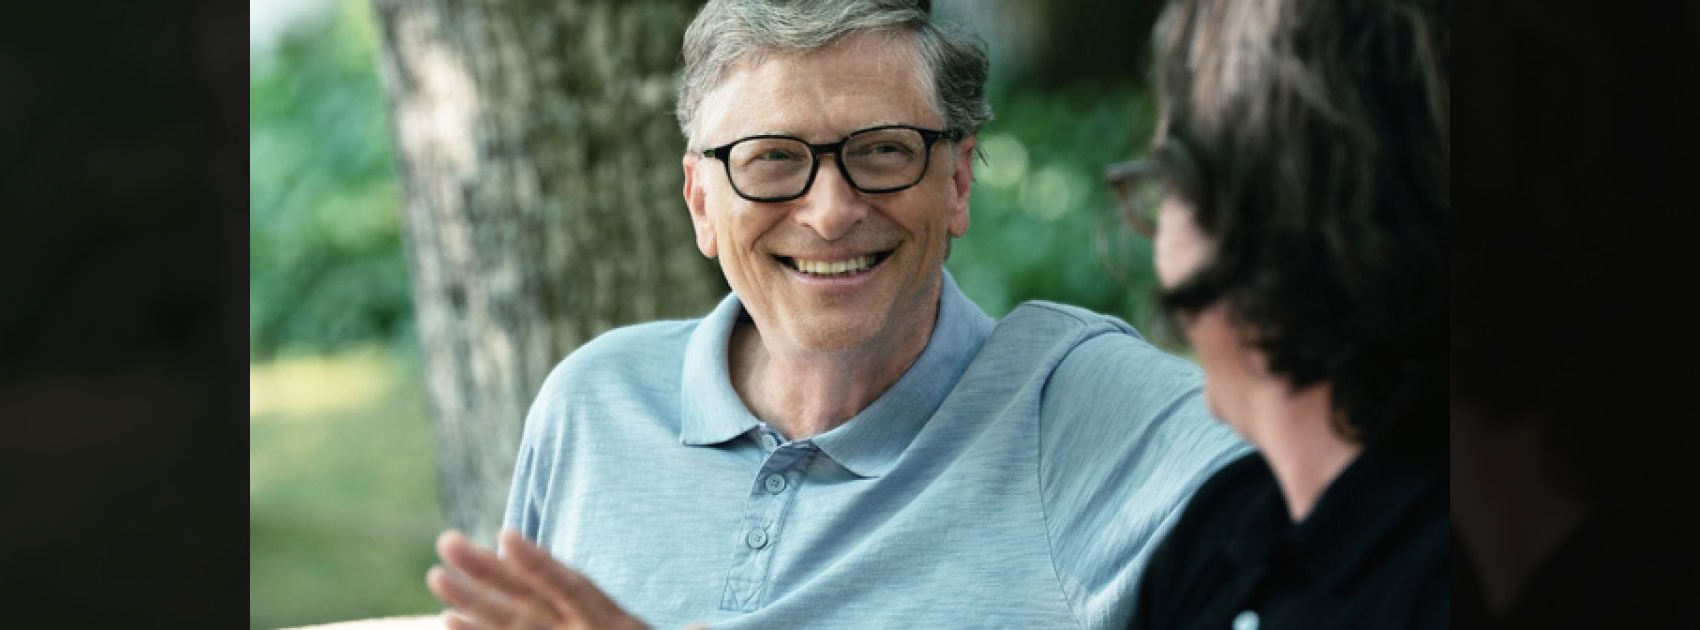 Inside Mind Of Bill Gates,Startup Stories,Inside Bill Gates Brain,Bill Gates Latest News 2019,Microsoft Founder Bill Gates,Bill Gates Documentary Series,Inside Bill’s Brain,Decoding Bill Gates,Bill Gates Netflix Documentary